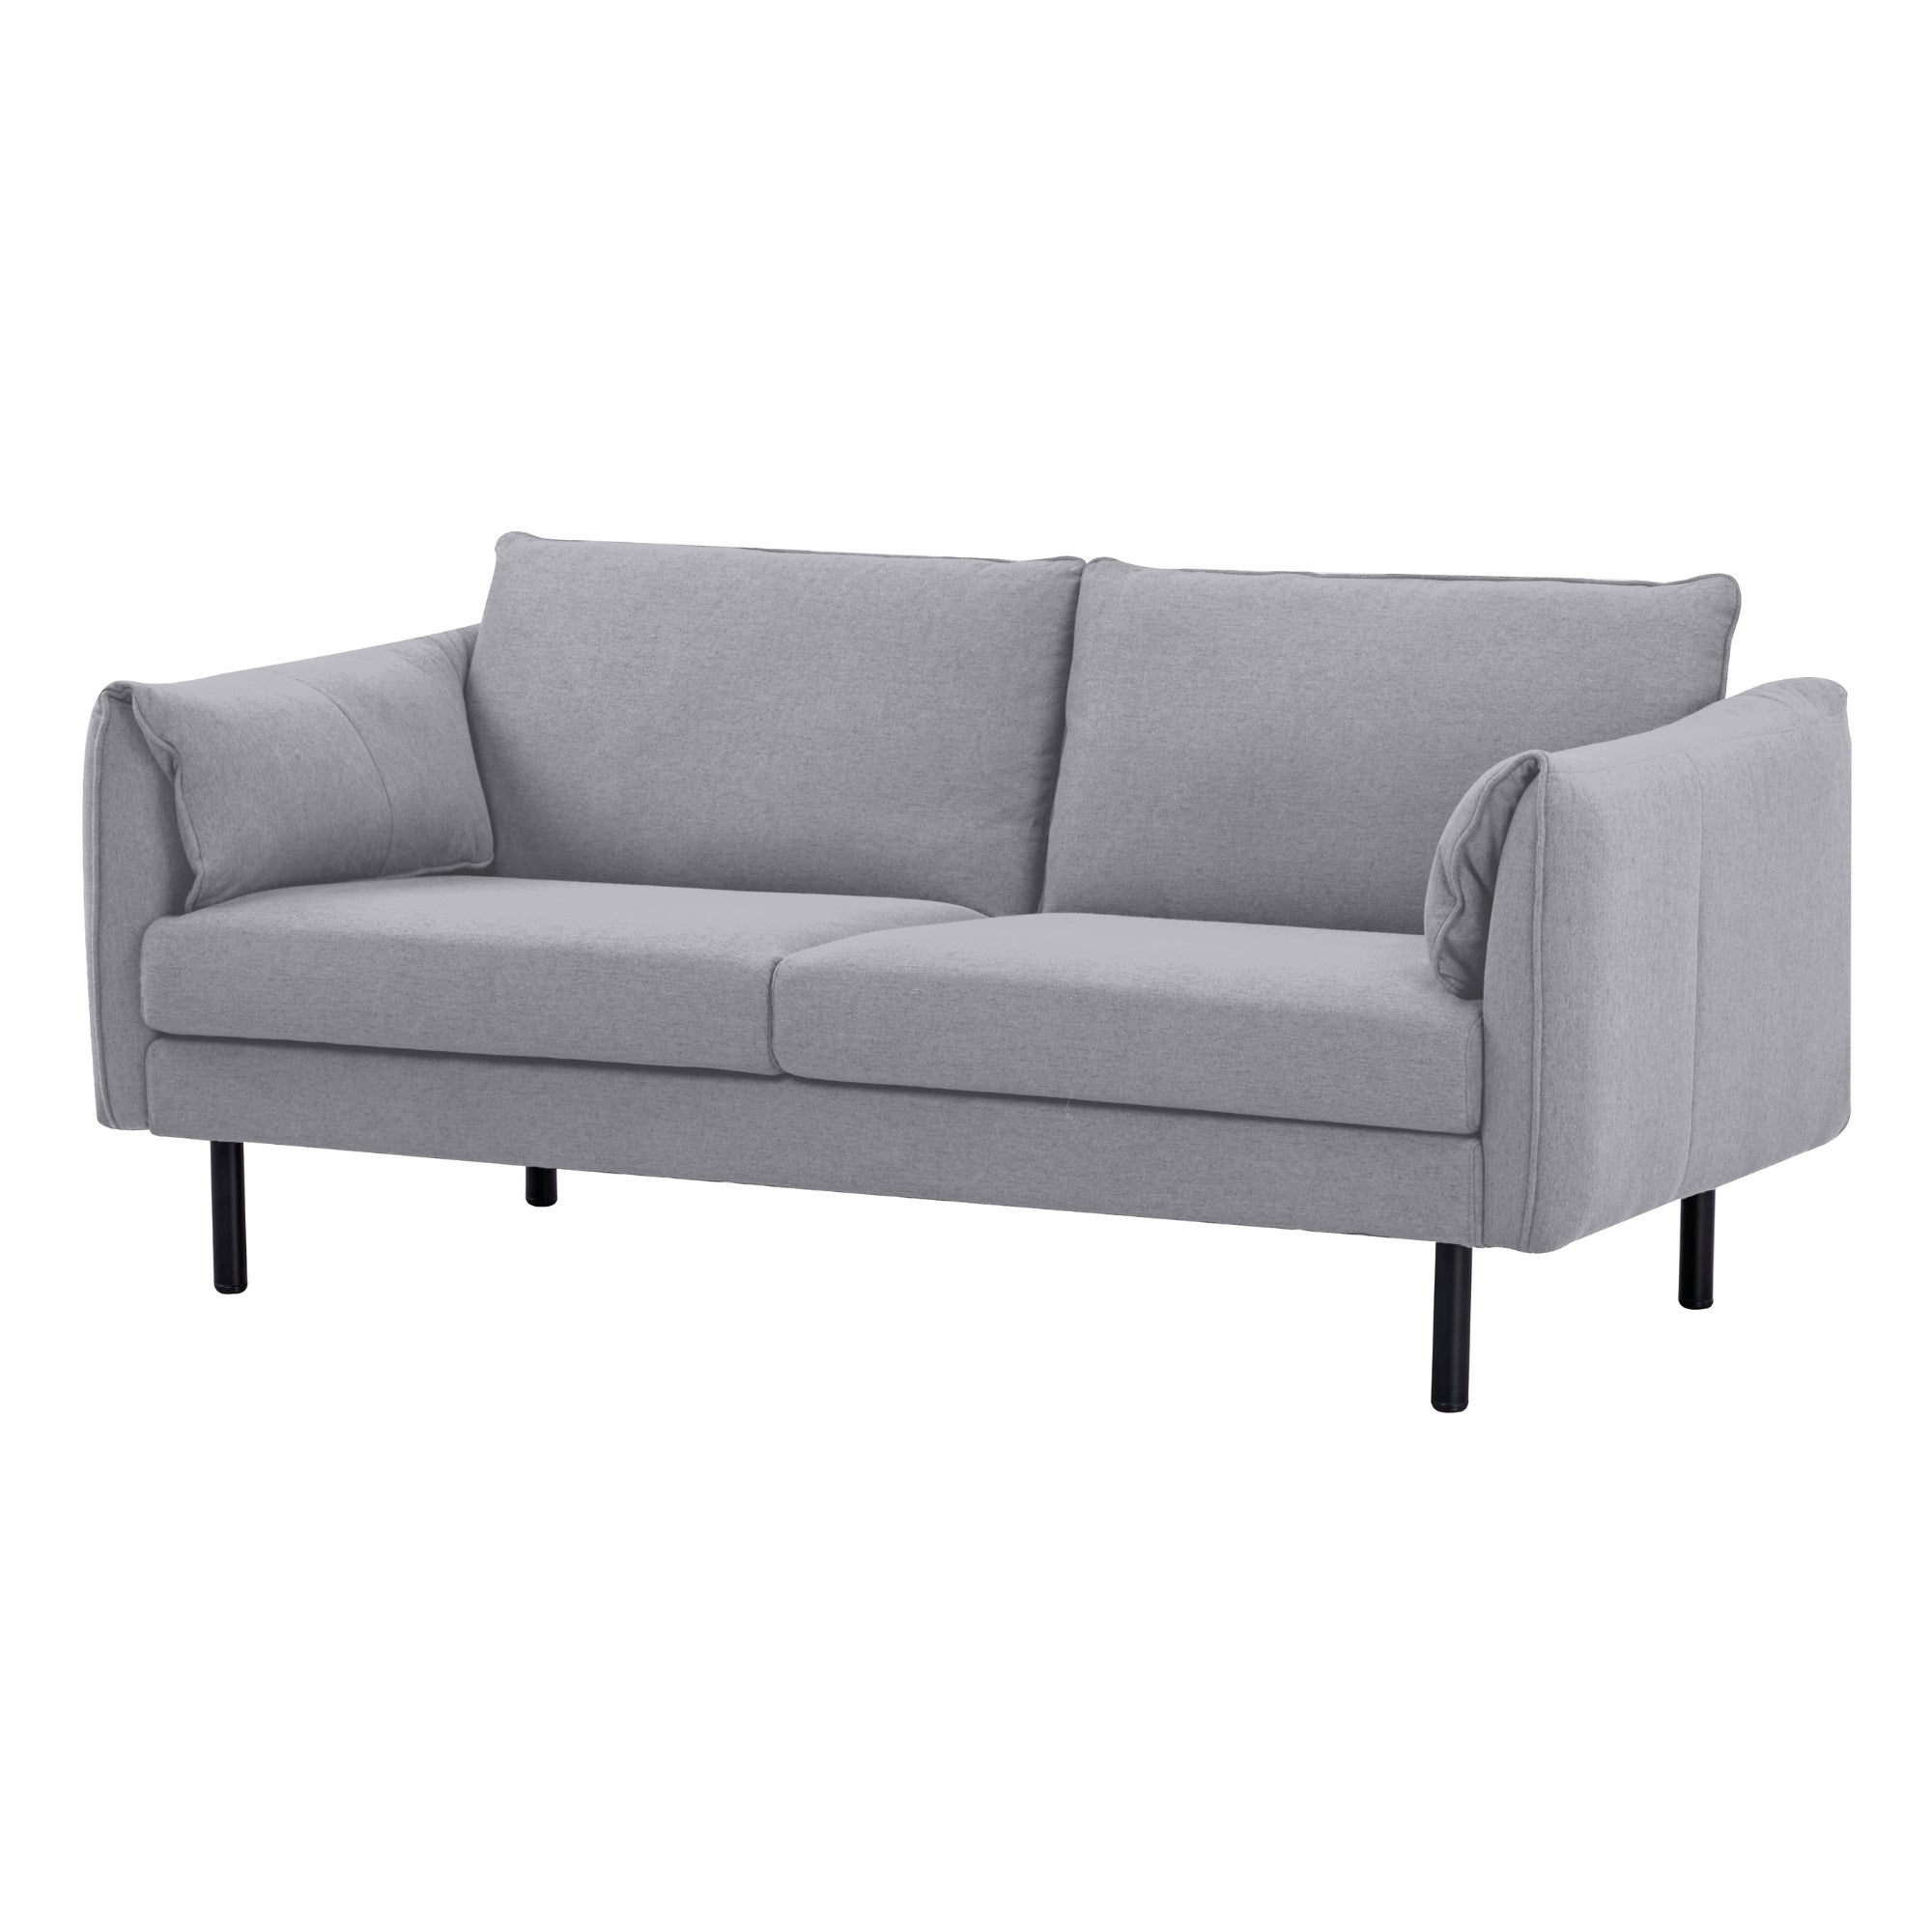 Grey 3-Seater Fabric Sofa, S Springs, Metal Legs - Scandinavian Style